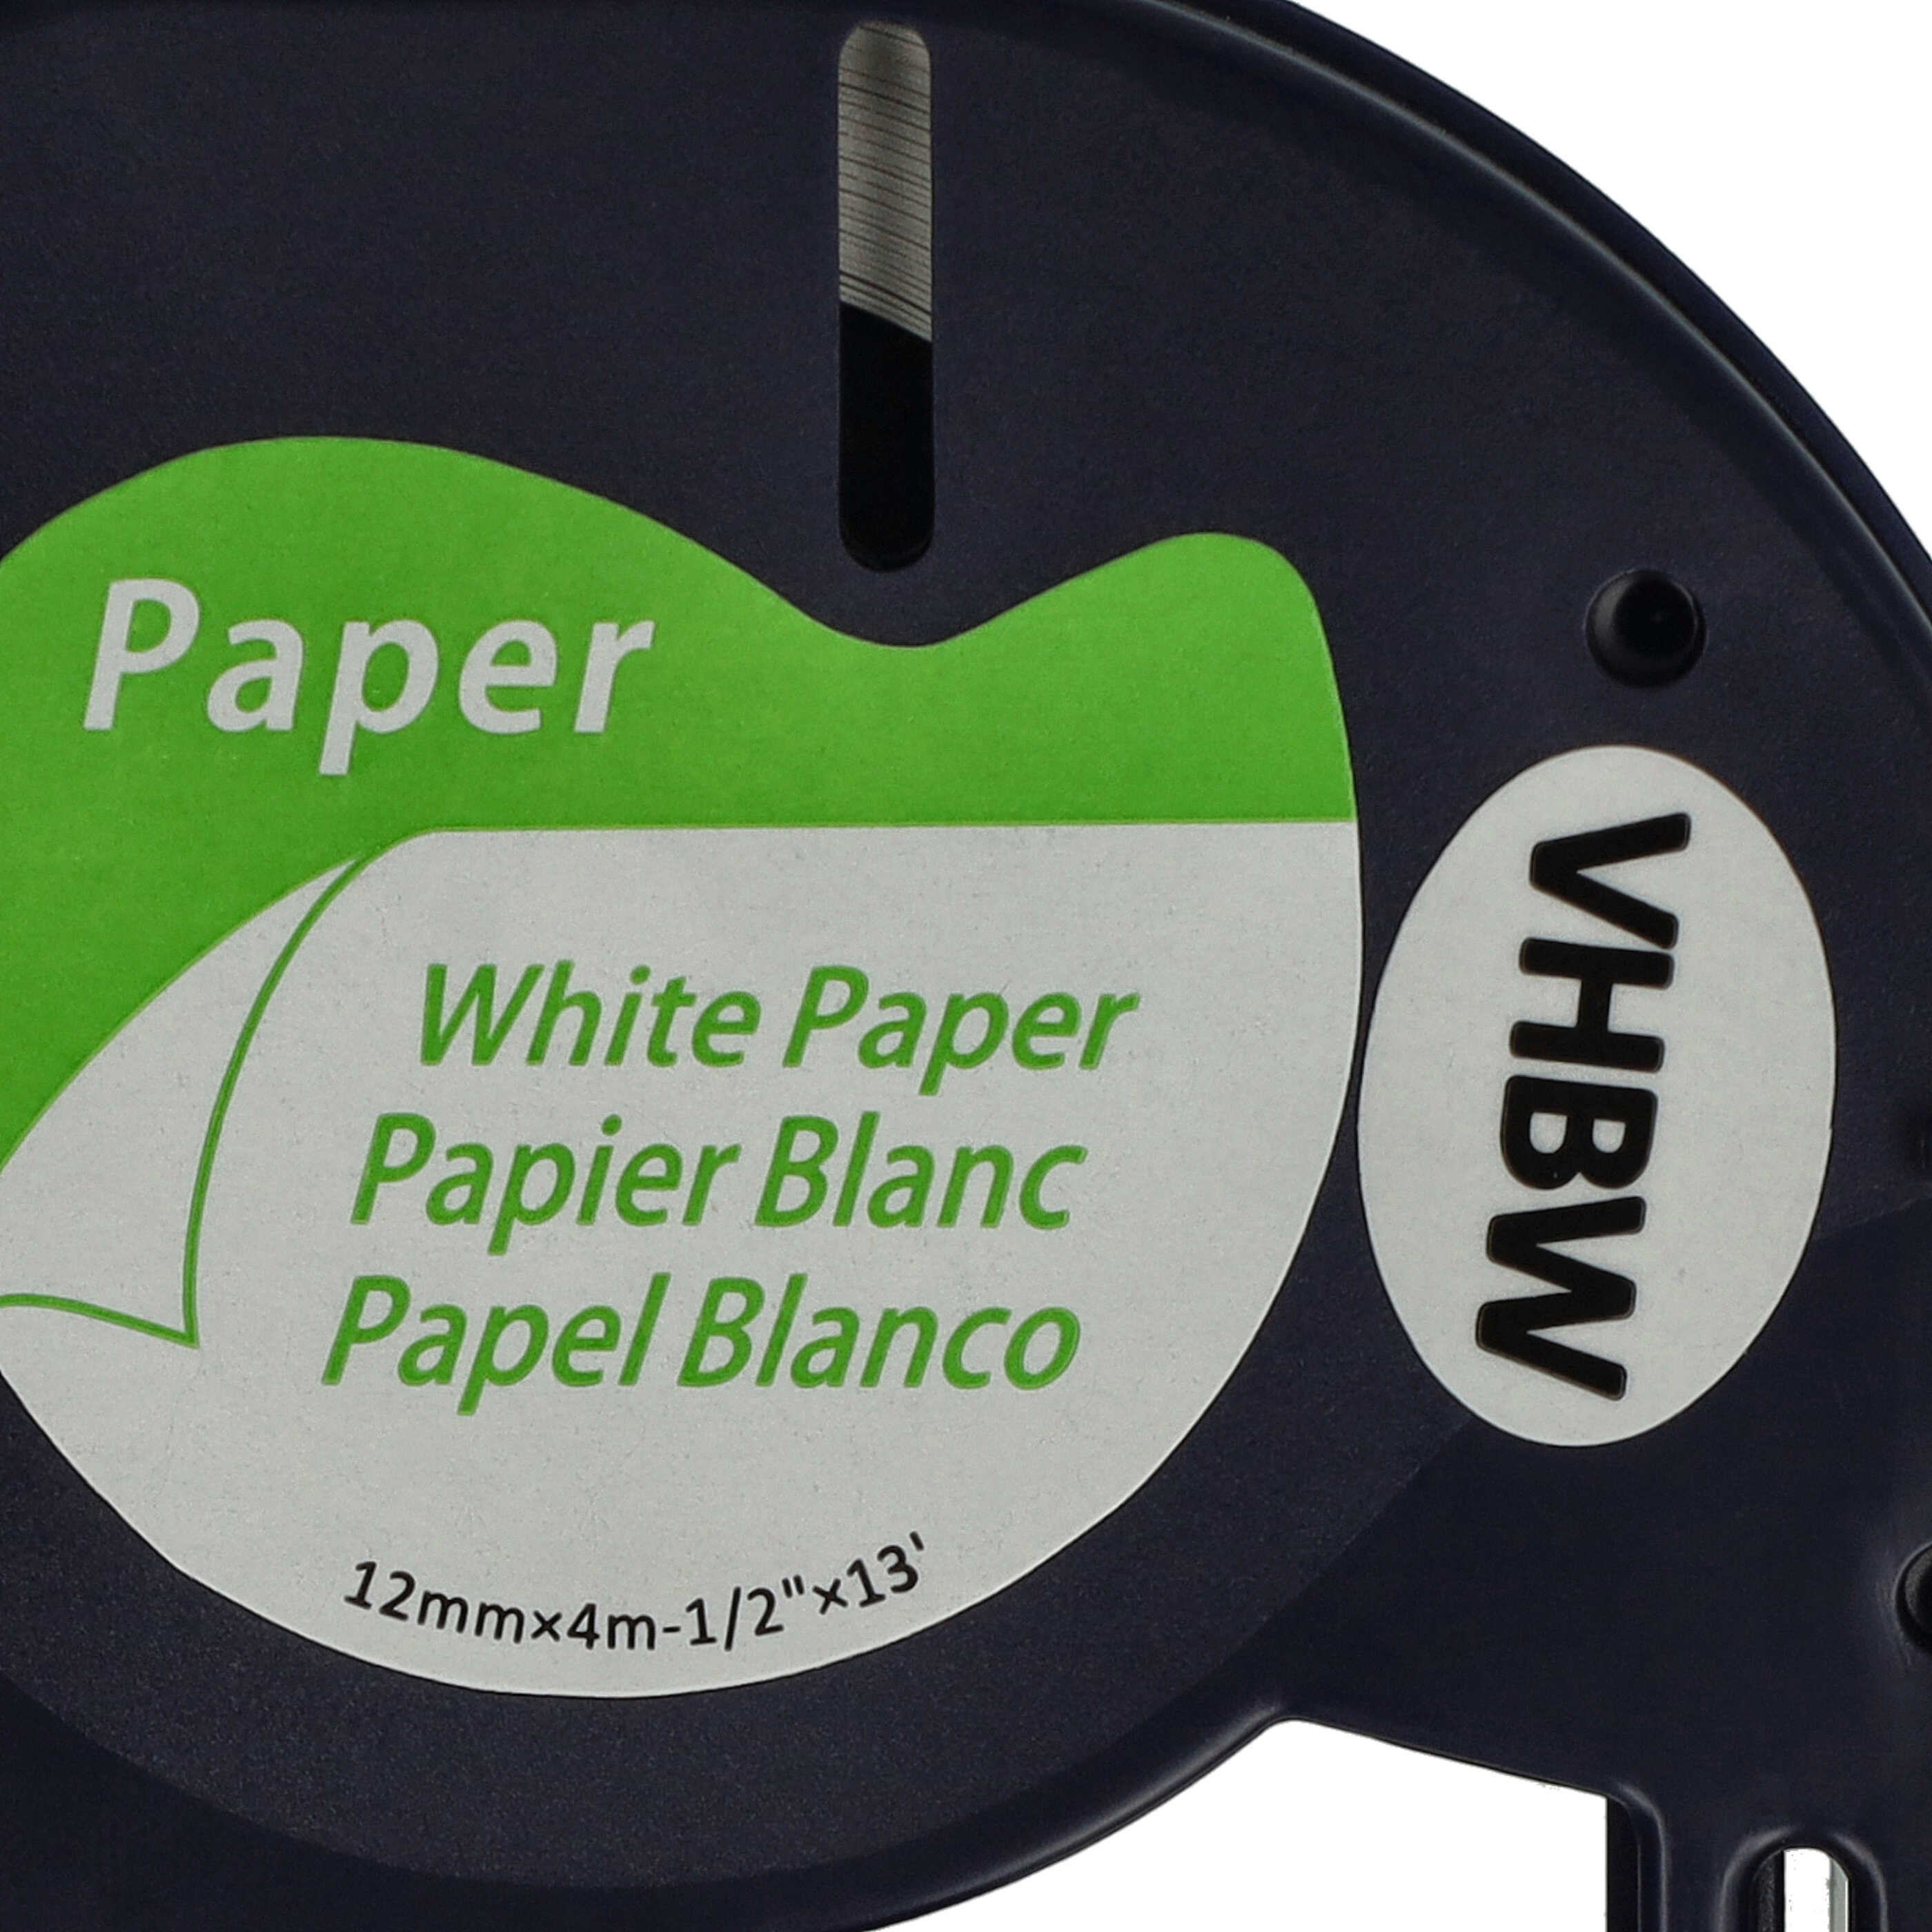 Casete cinta escritura papel reemplaza Dymo 91220, S0721510 Negro su Blanco